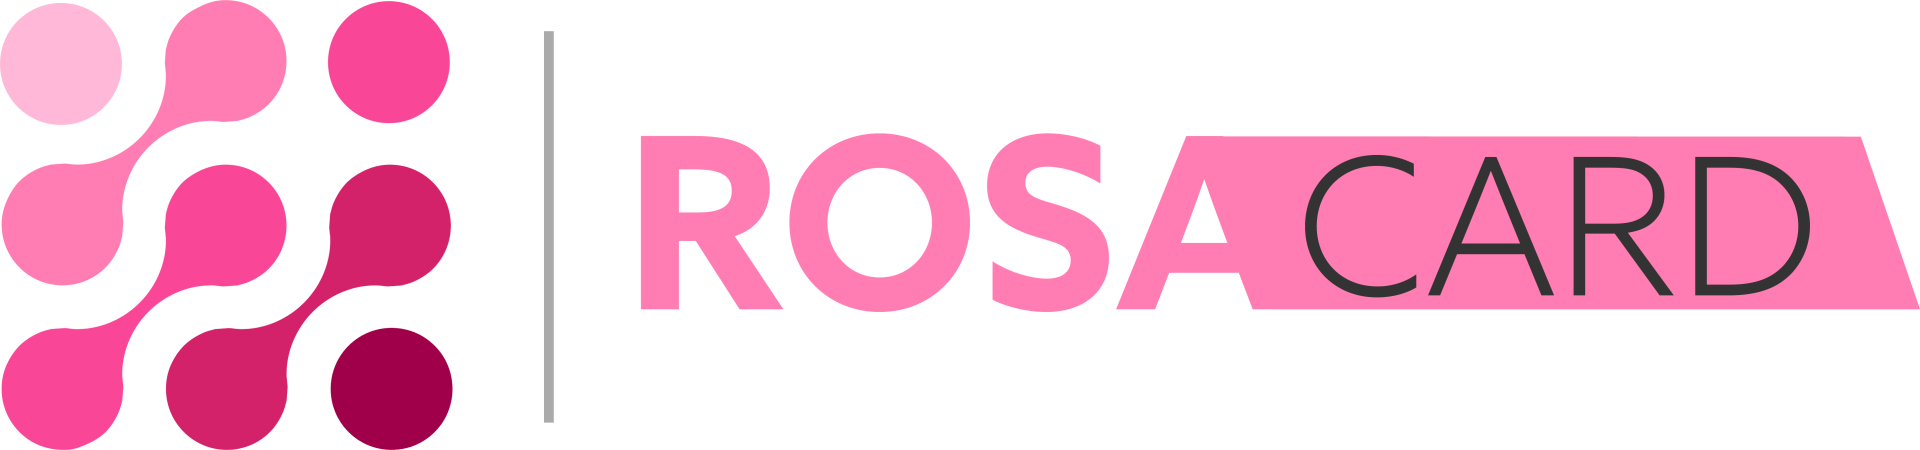 Rosa Prepaid Master card, Debitkarte, Debit Card, Master Card